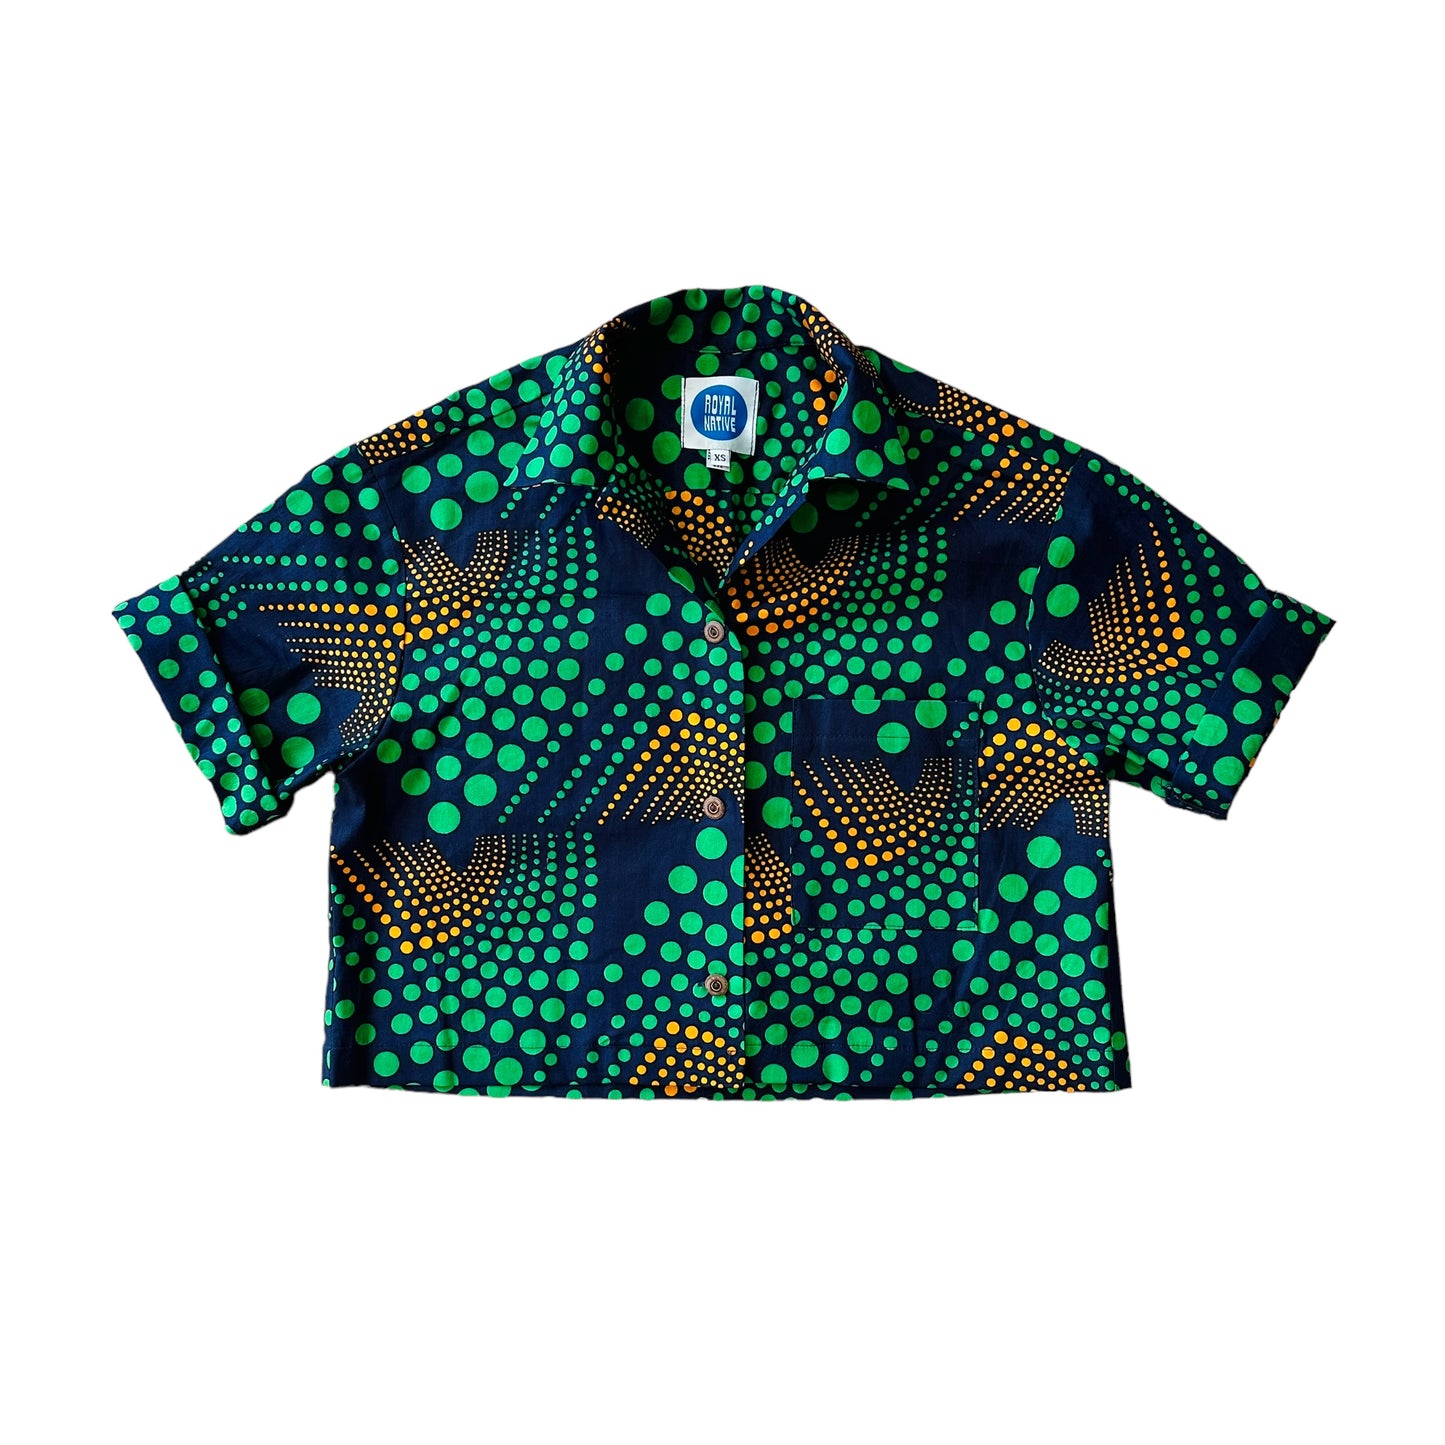 Venice Hawaiian shirt in Chameleon